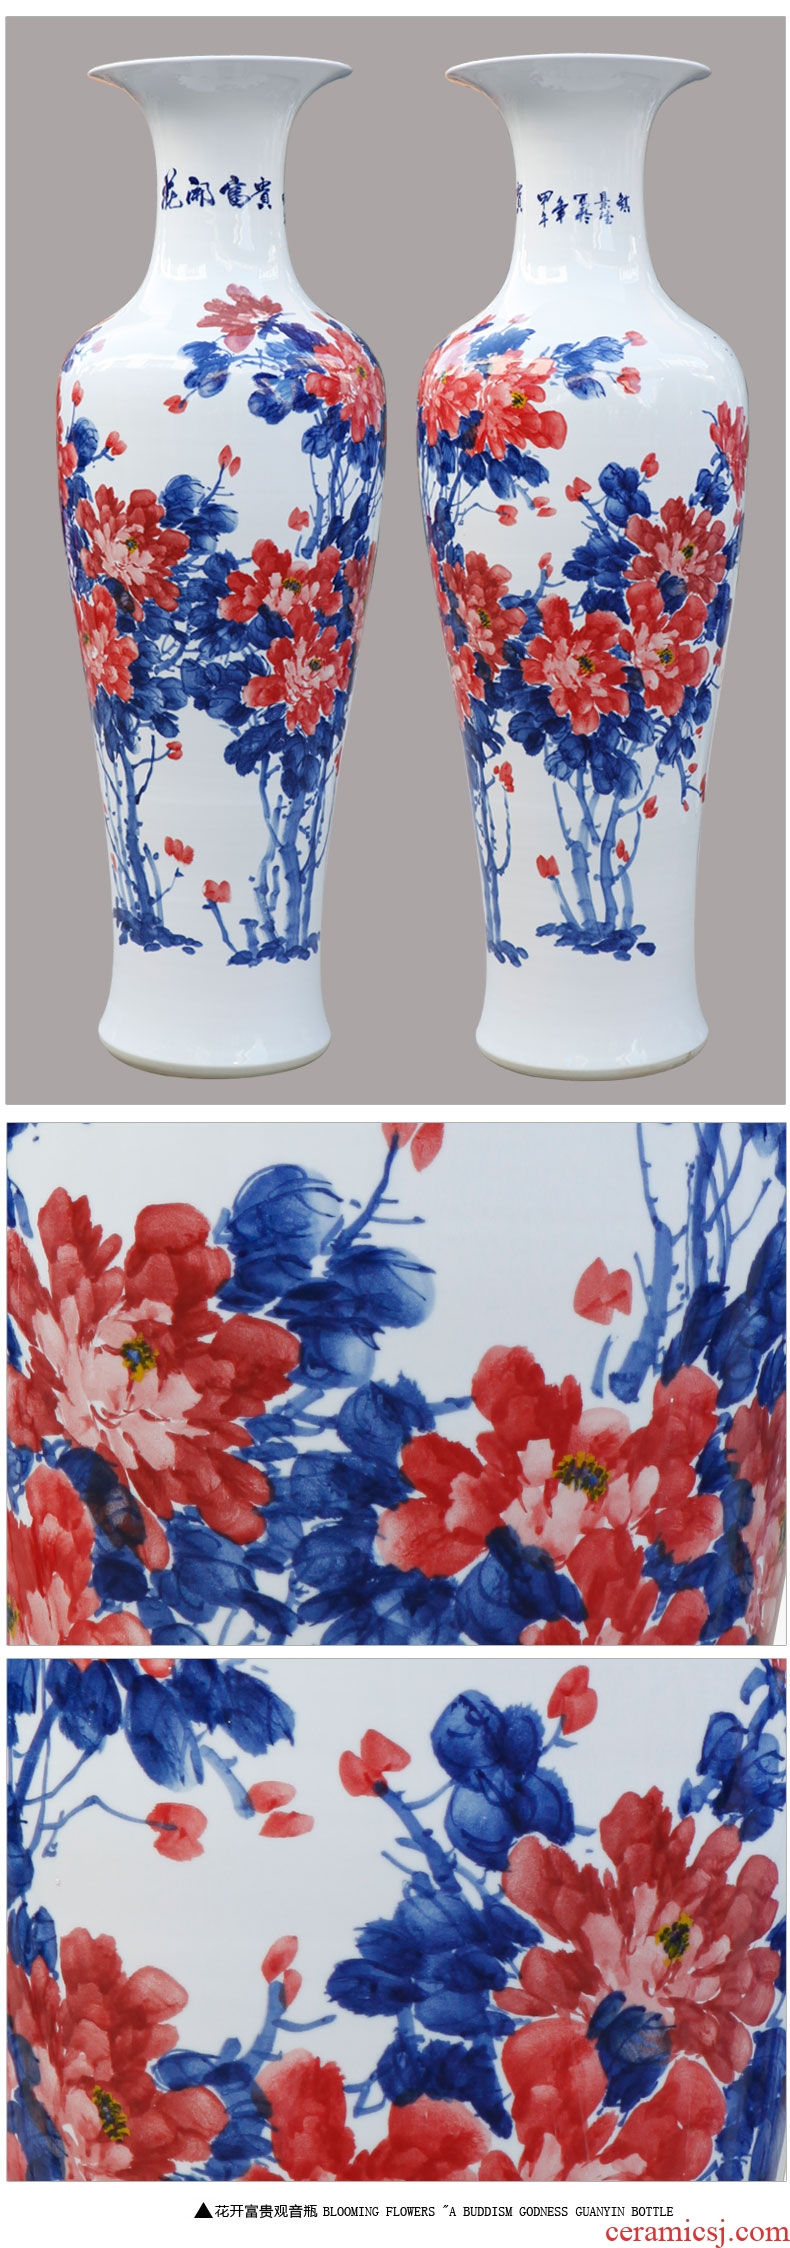 Jingdezhen ceramic large vases, garden villa decoration theme hotel furnishing articles home decoration floral outraged - 22267111214